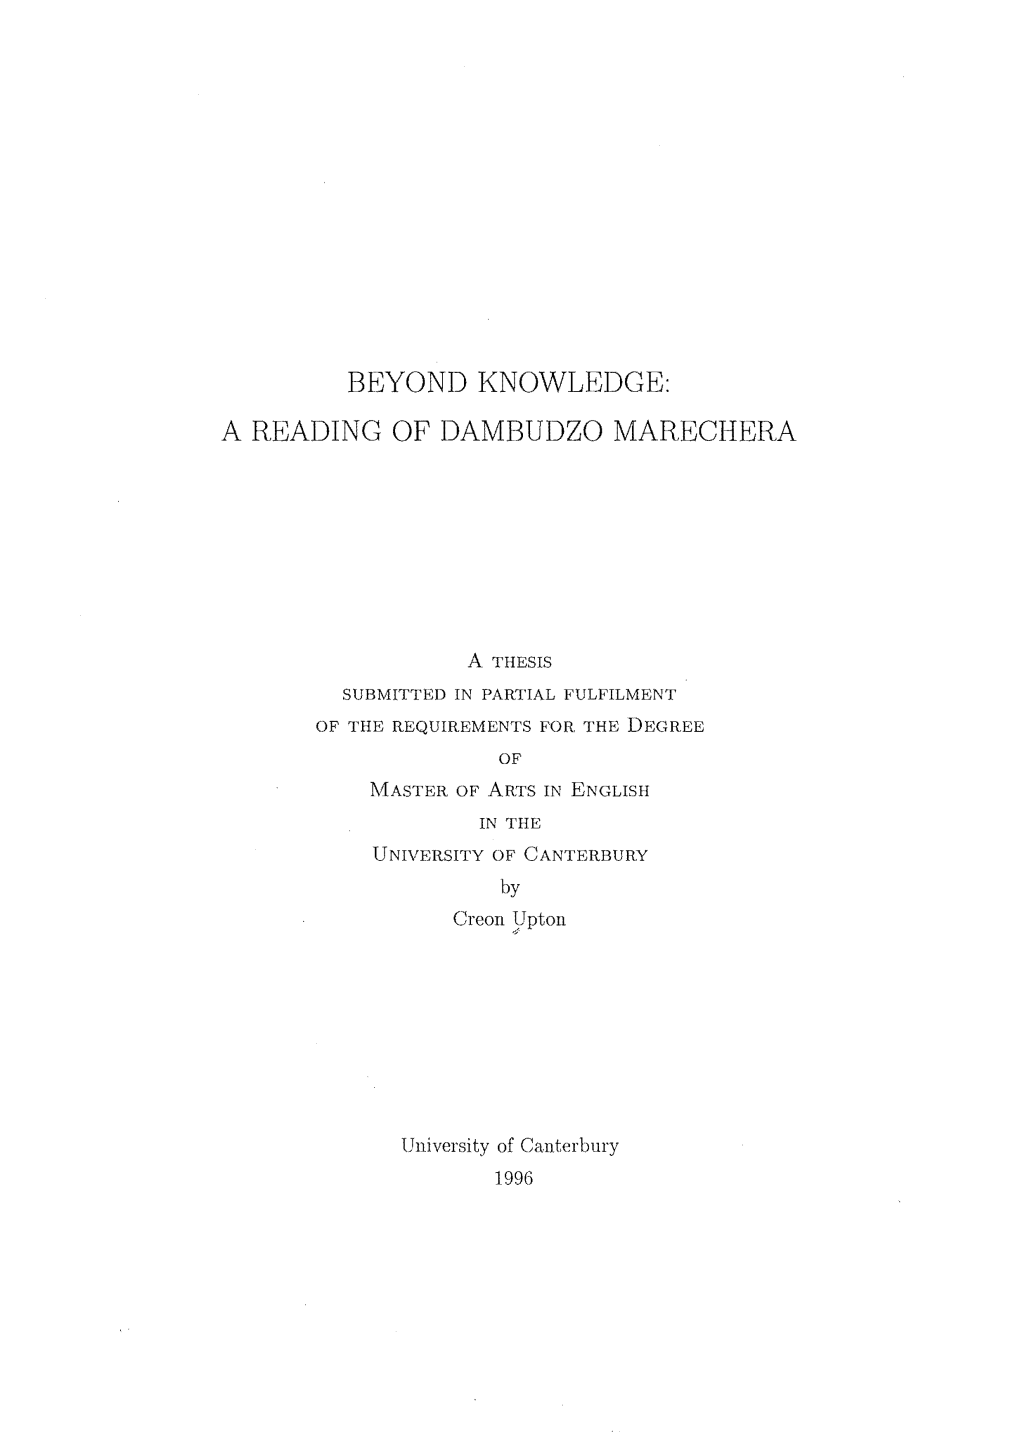 Beyond Knowledge : a Reading of Dambudzo Marechera